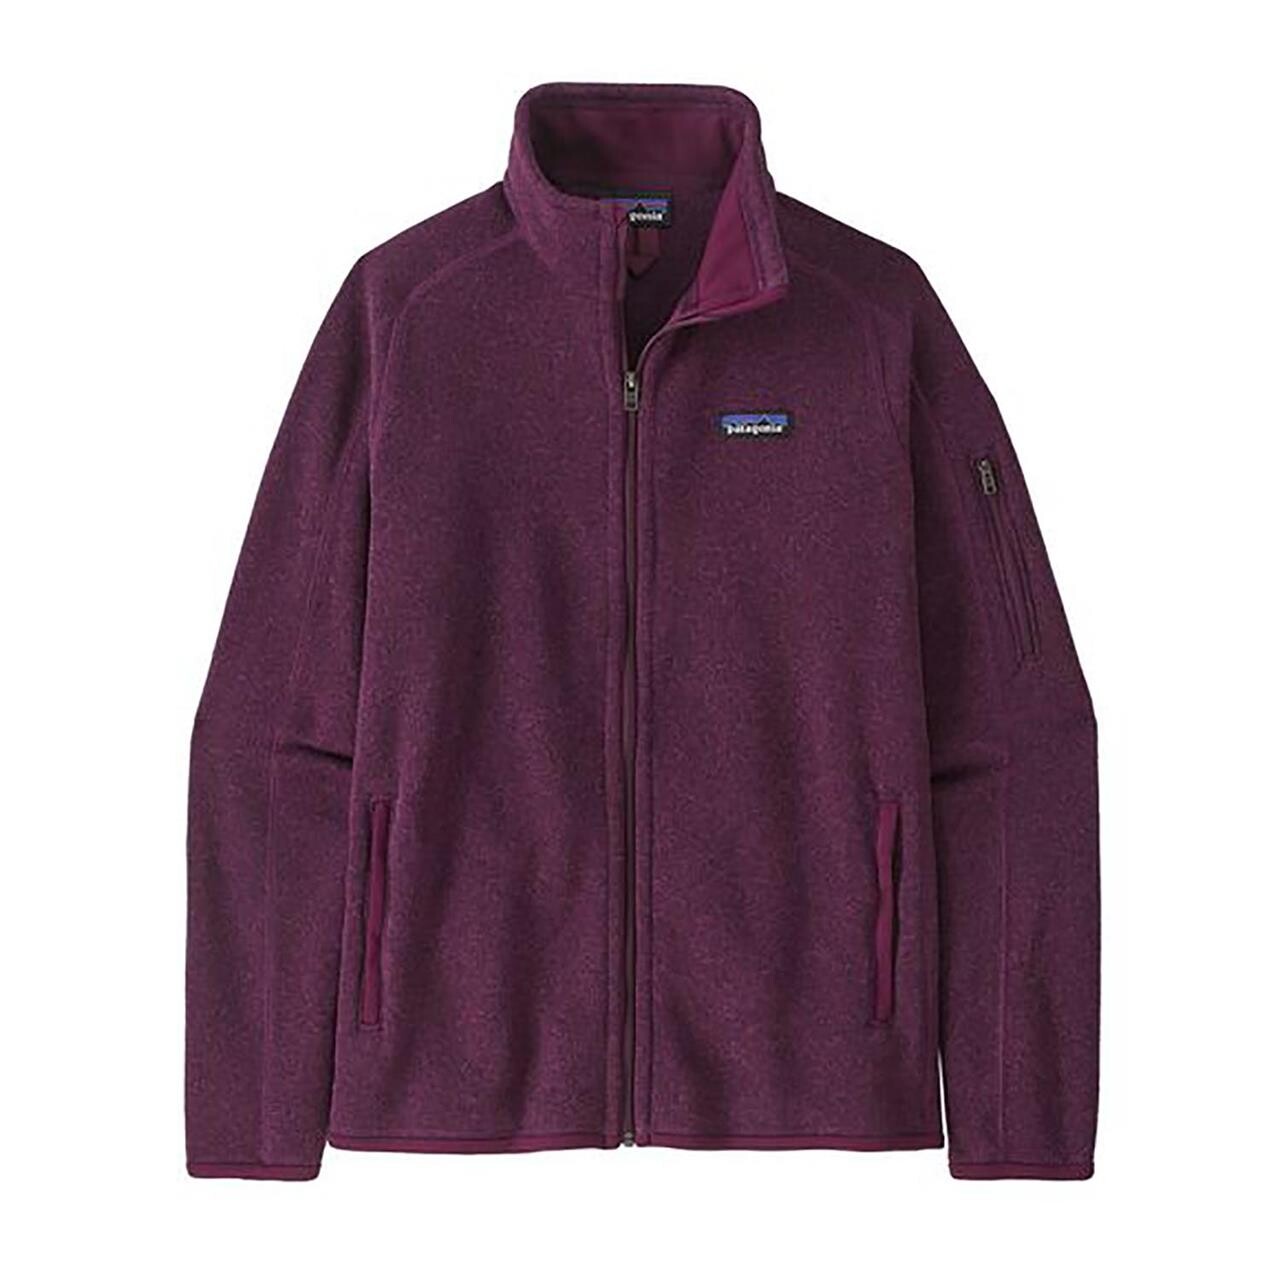 Patagonia Womens Better Sweater Jacket  (Lilla (NIGHT PLUM) Medium)